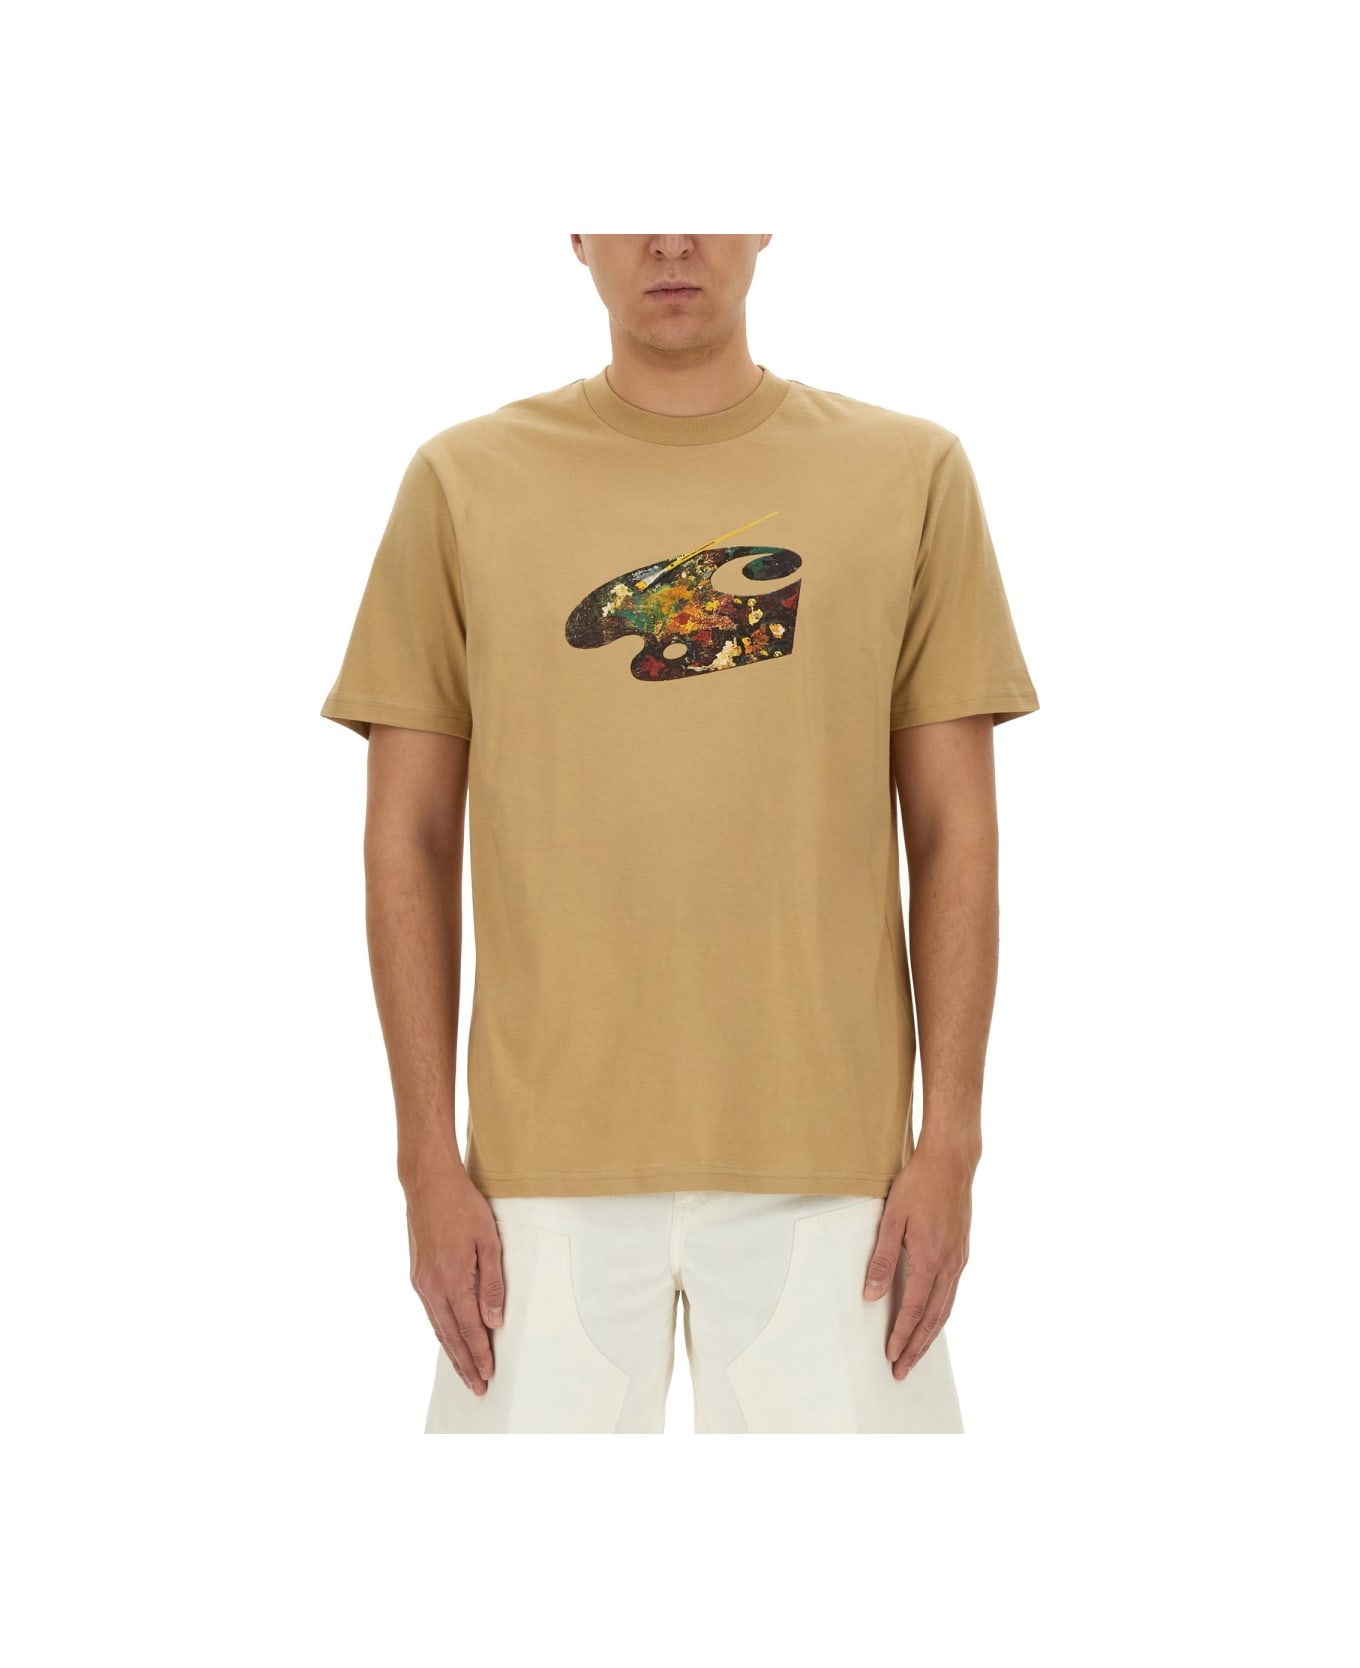 Carhartt T-shirt "palette" - BEIGE シャツ